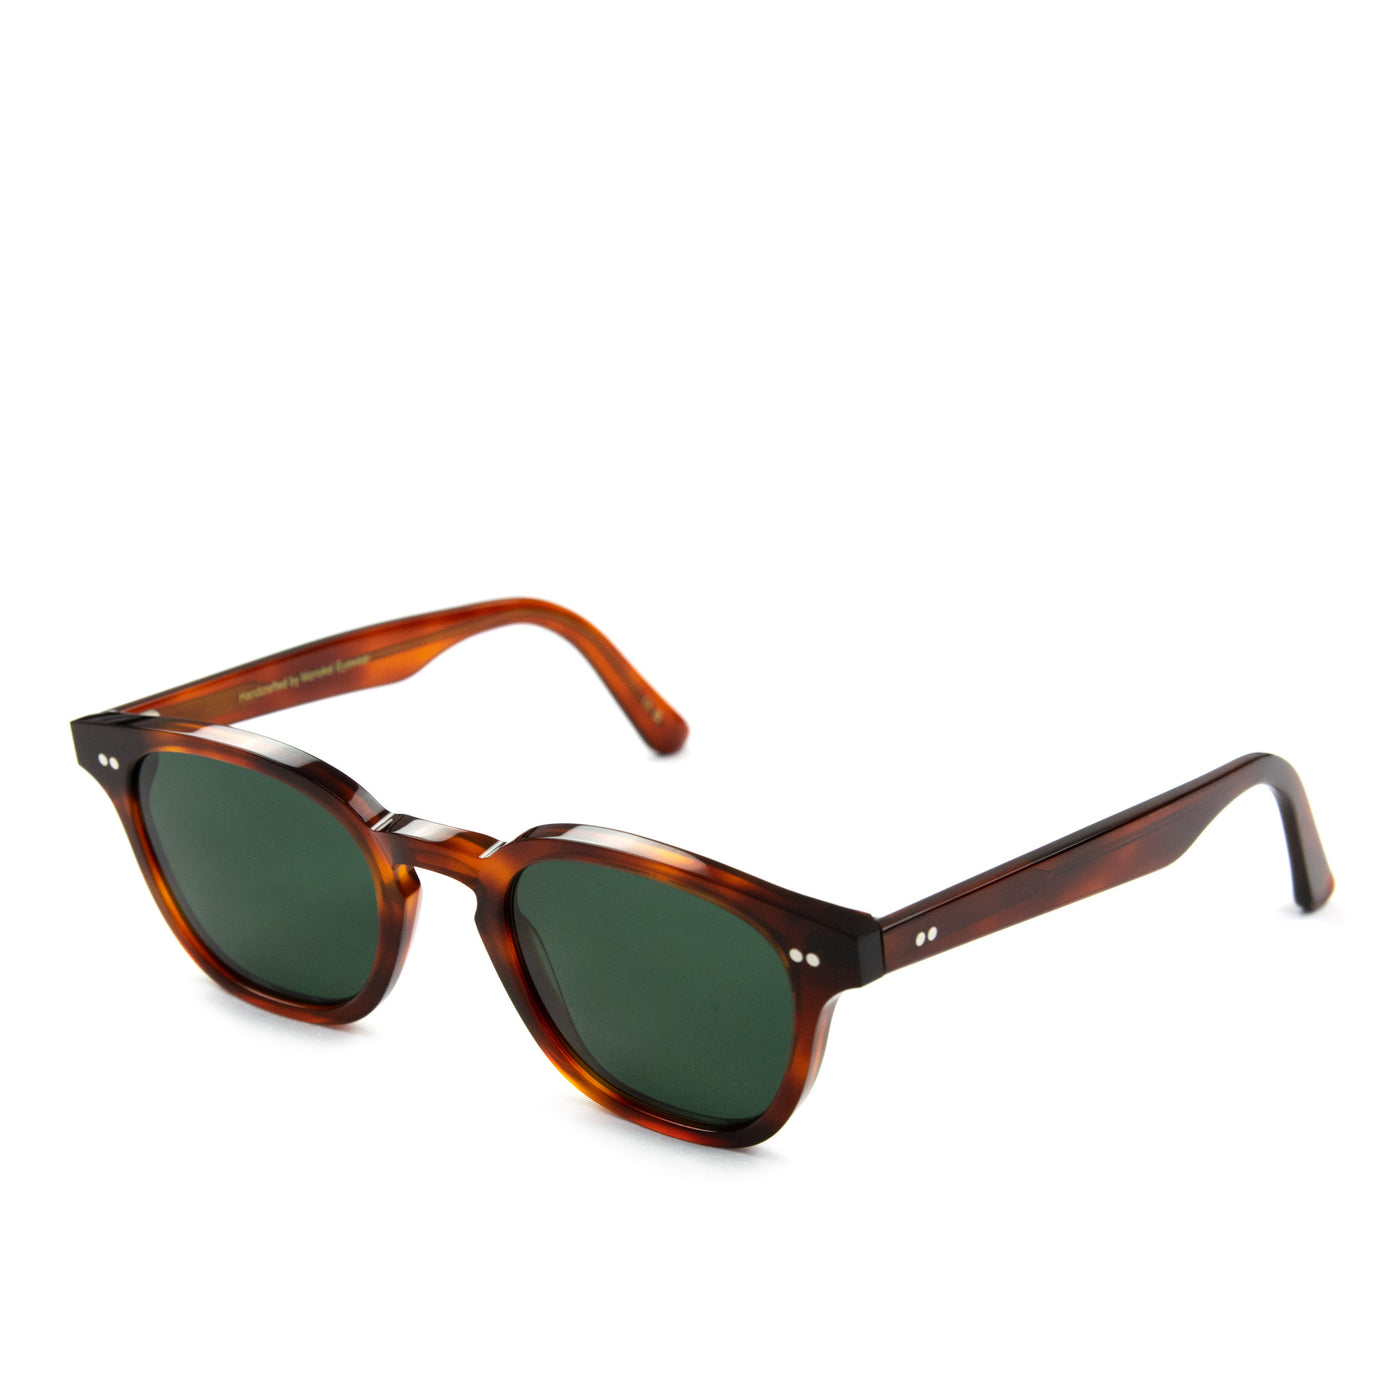 Monokel River Amber Sunglasses Green Solid Lens FULL